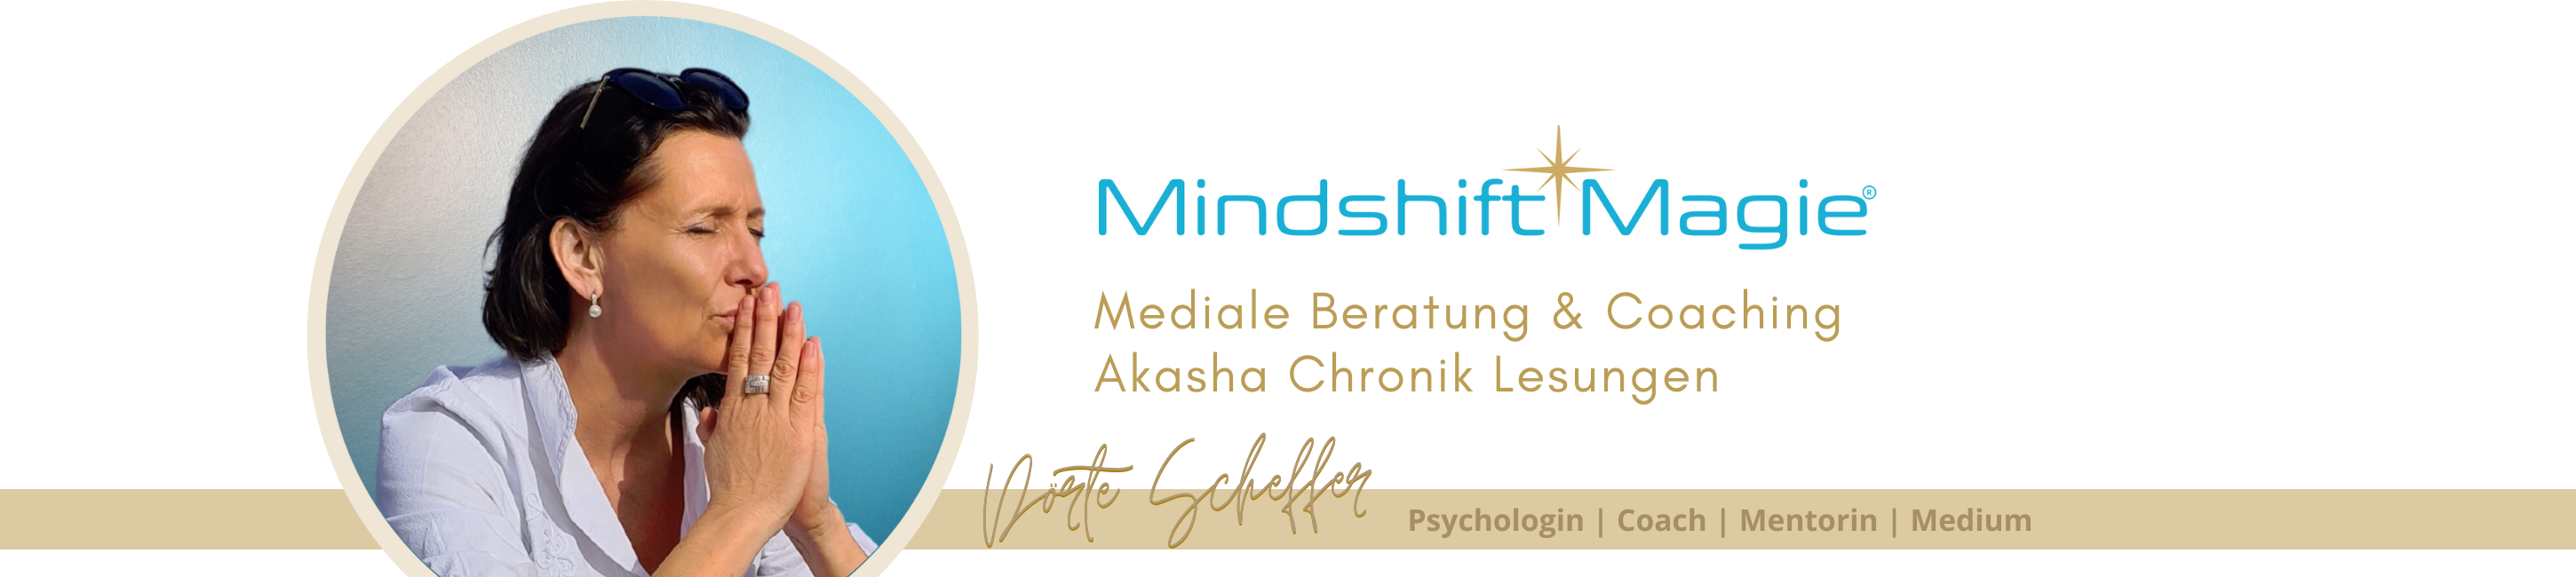 Mindshift Magie - Mediale Beratung und Coaching